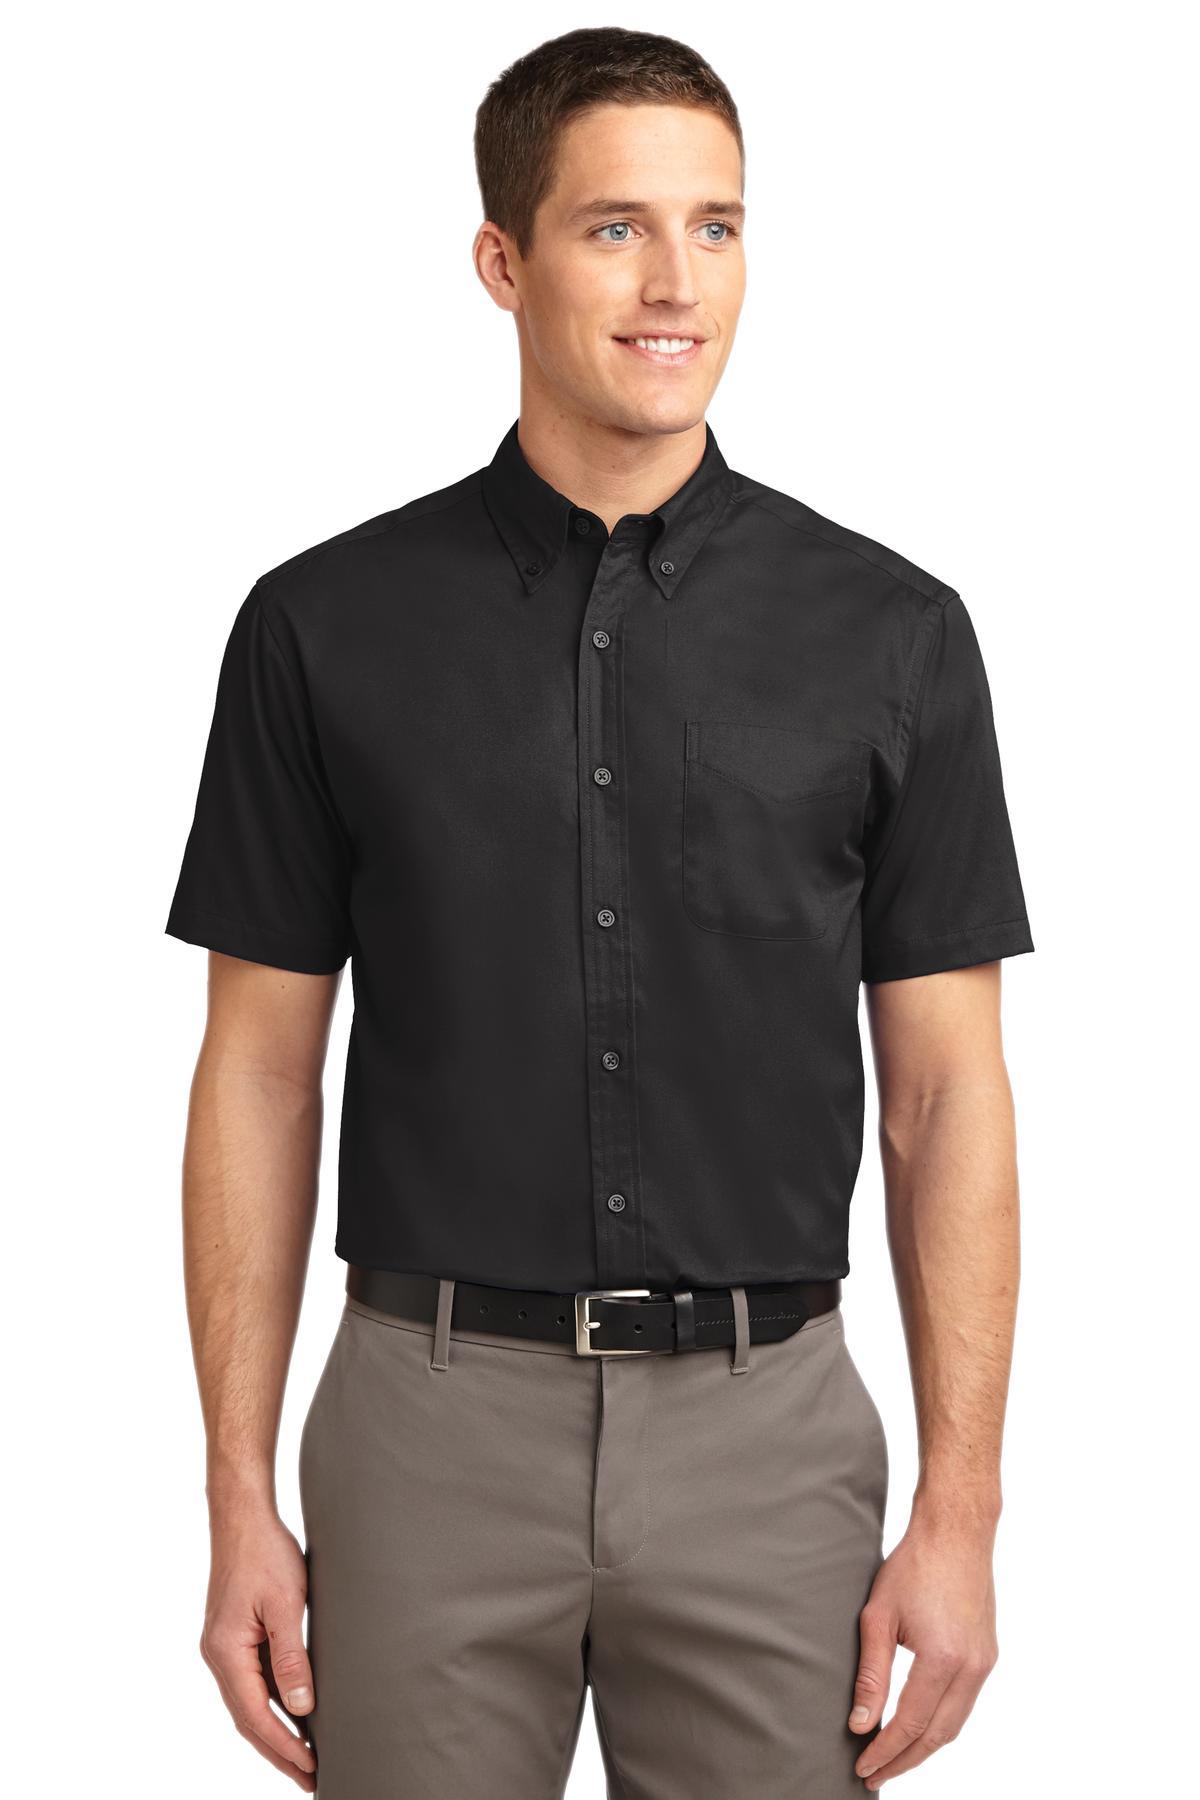 Port Authority Tall Short Sleeve Easy Care Shirt. TLS508 - Dresses Max